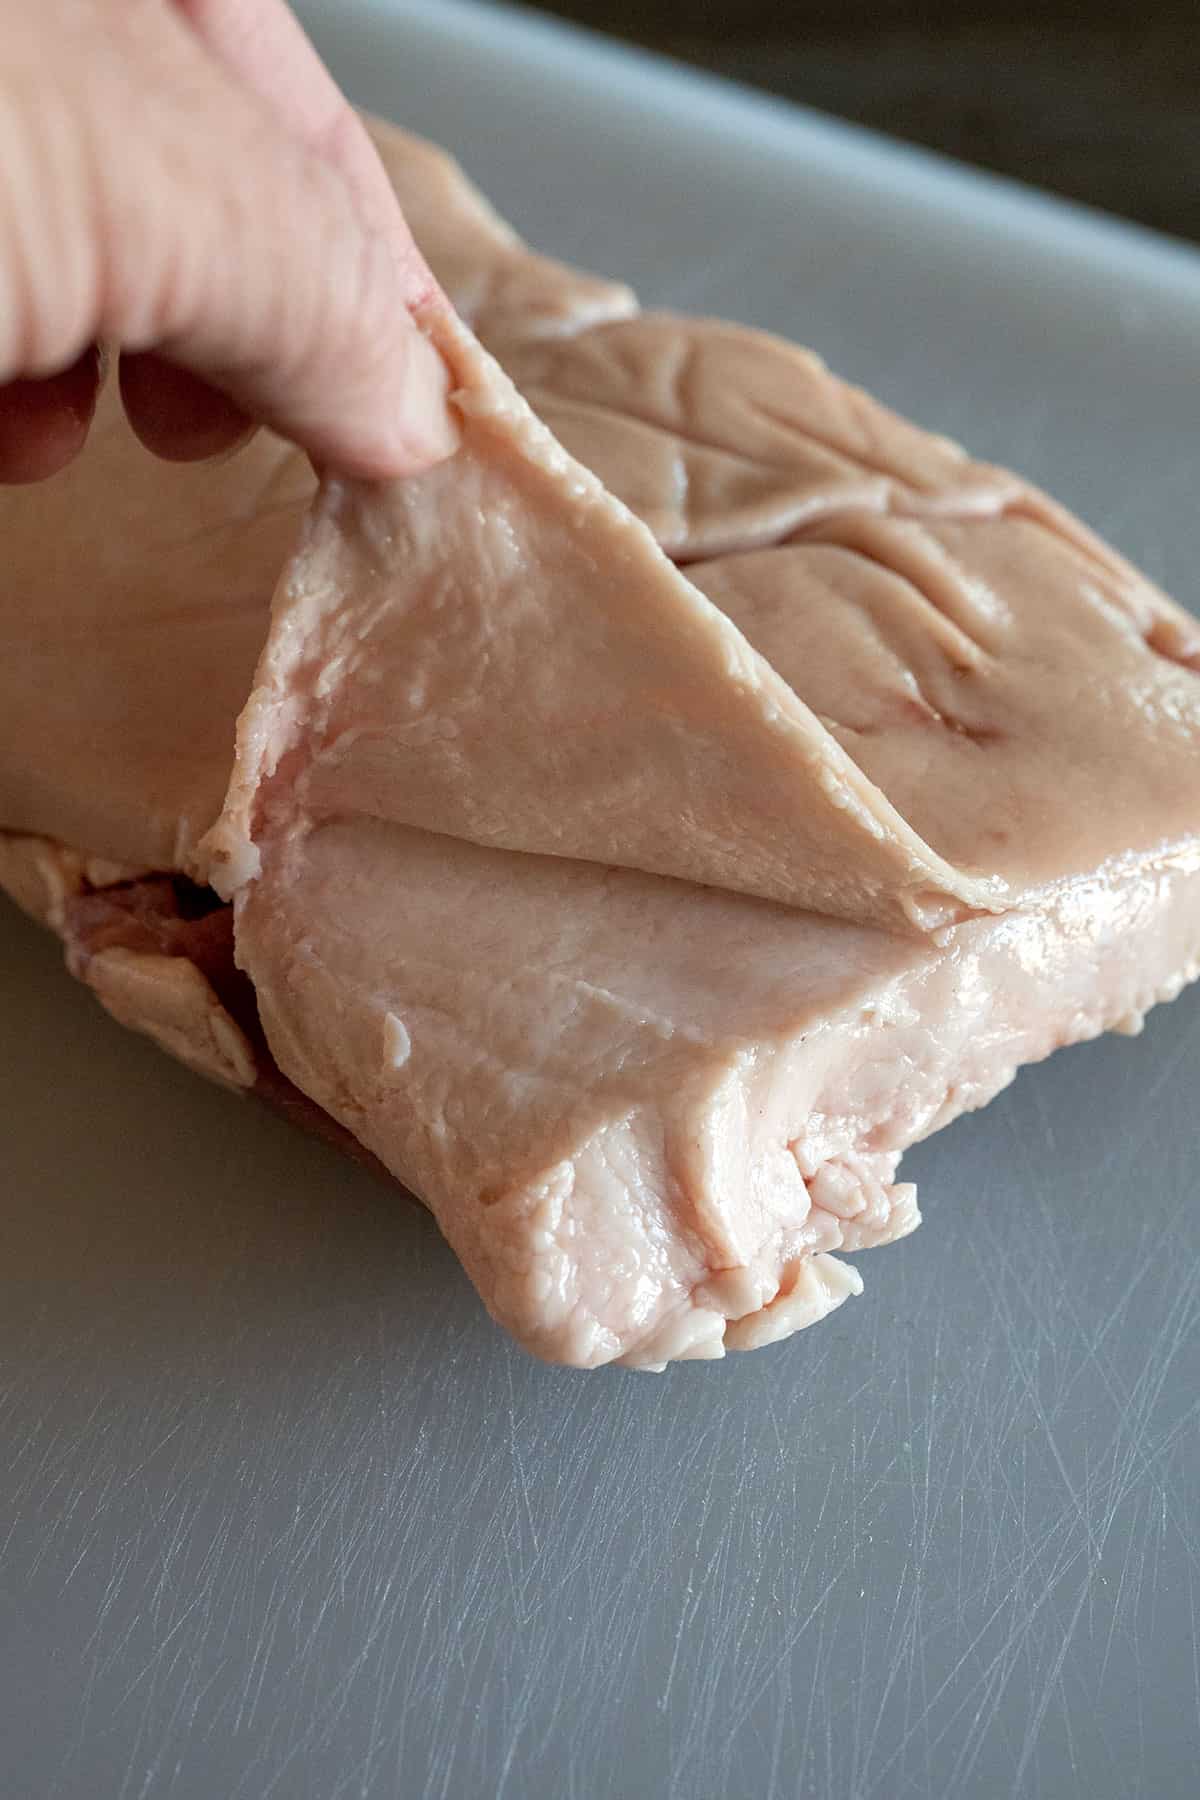 removing skin from pork belly.